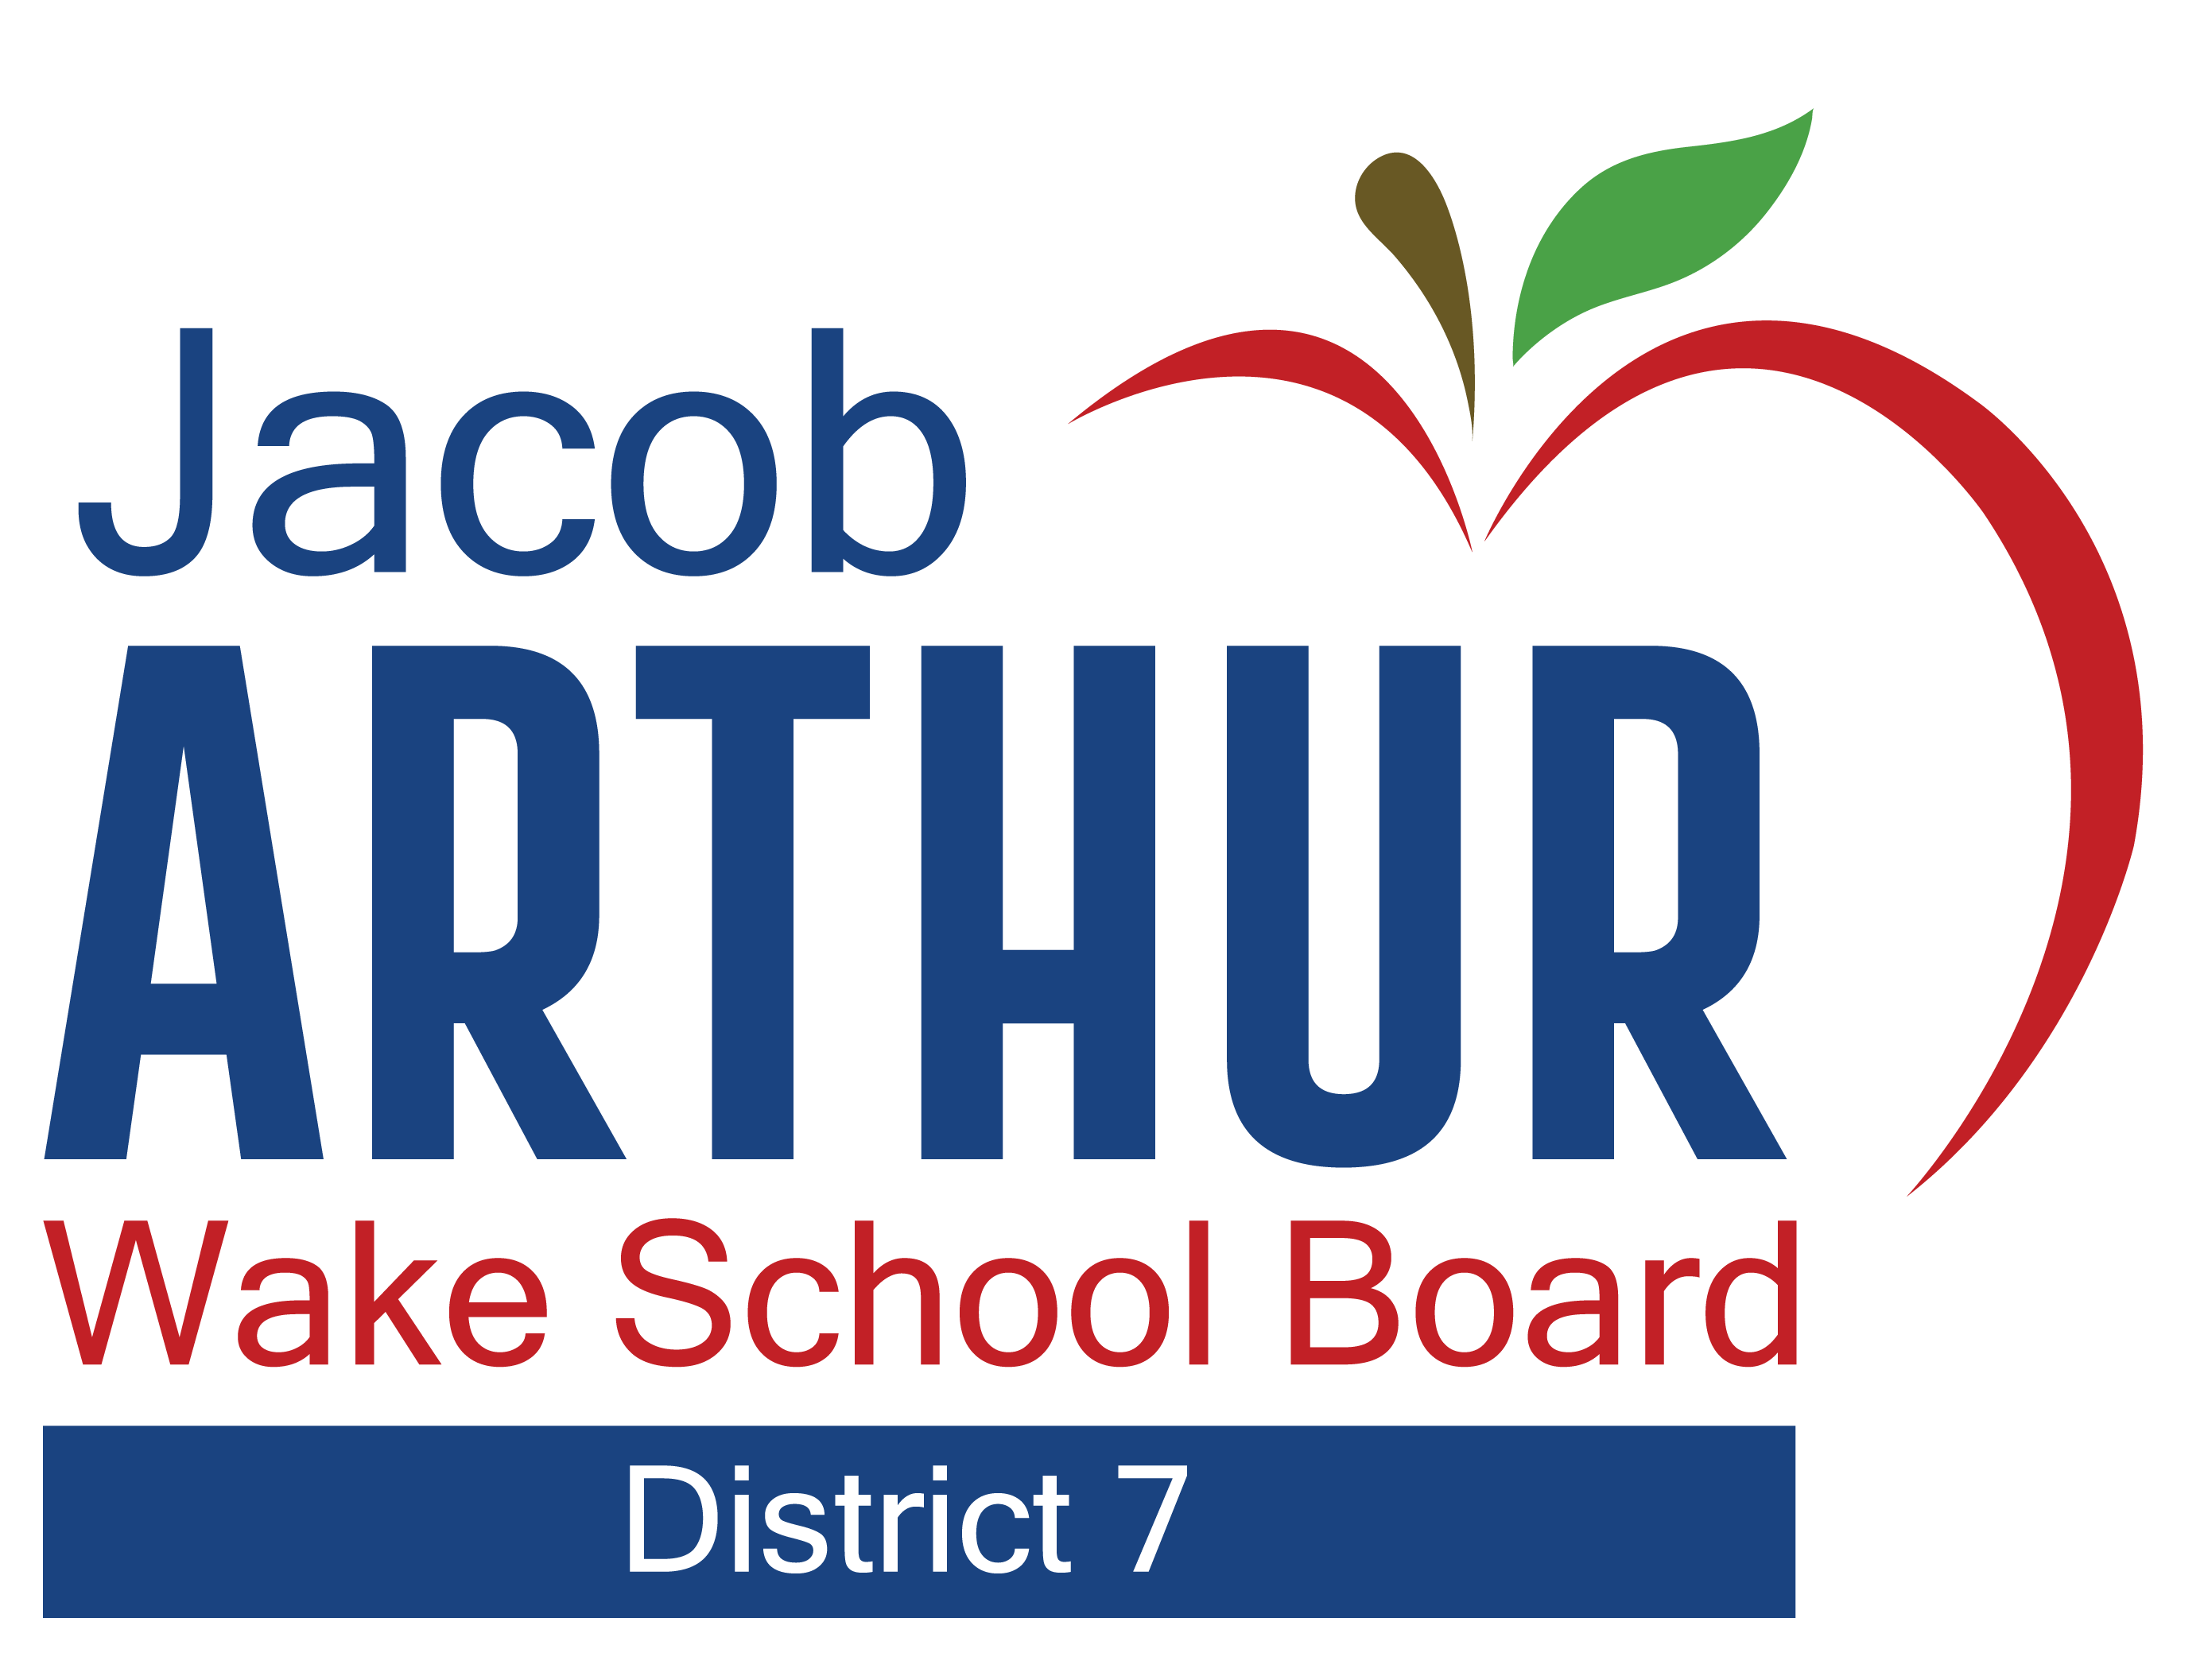 Jacob Arthur Wake School Board